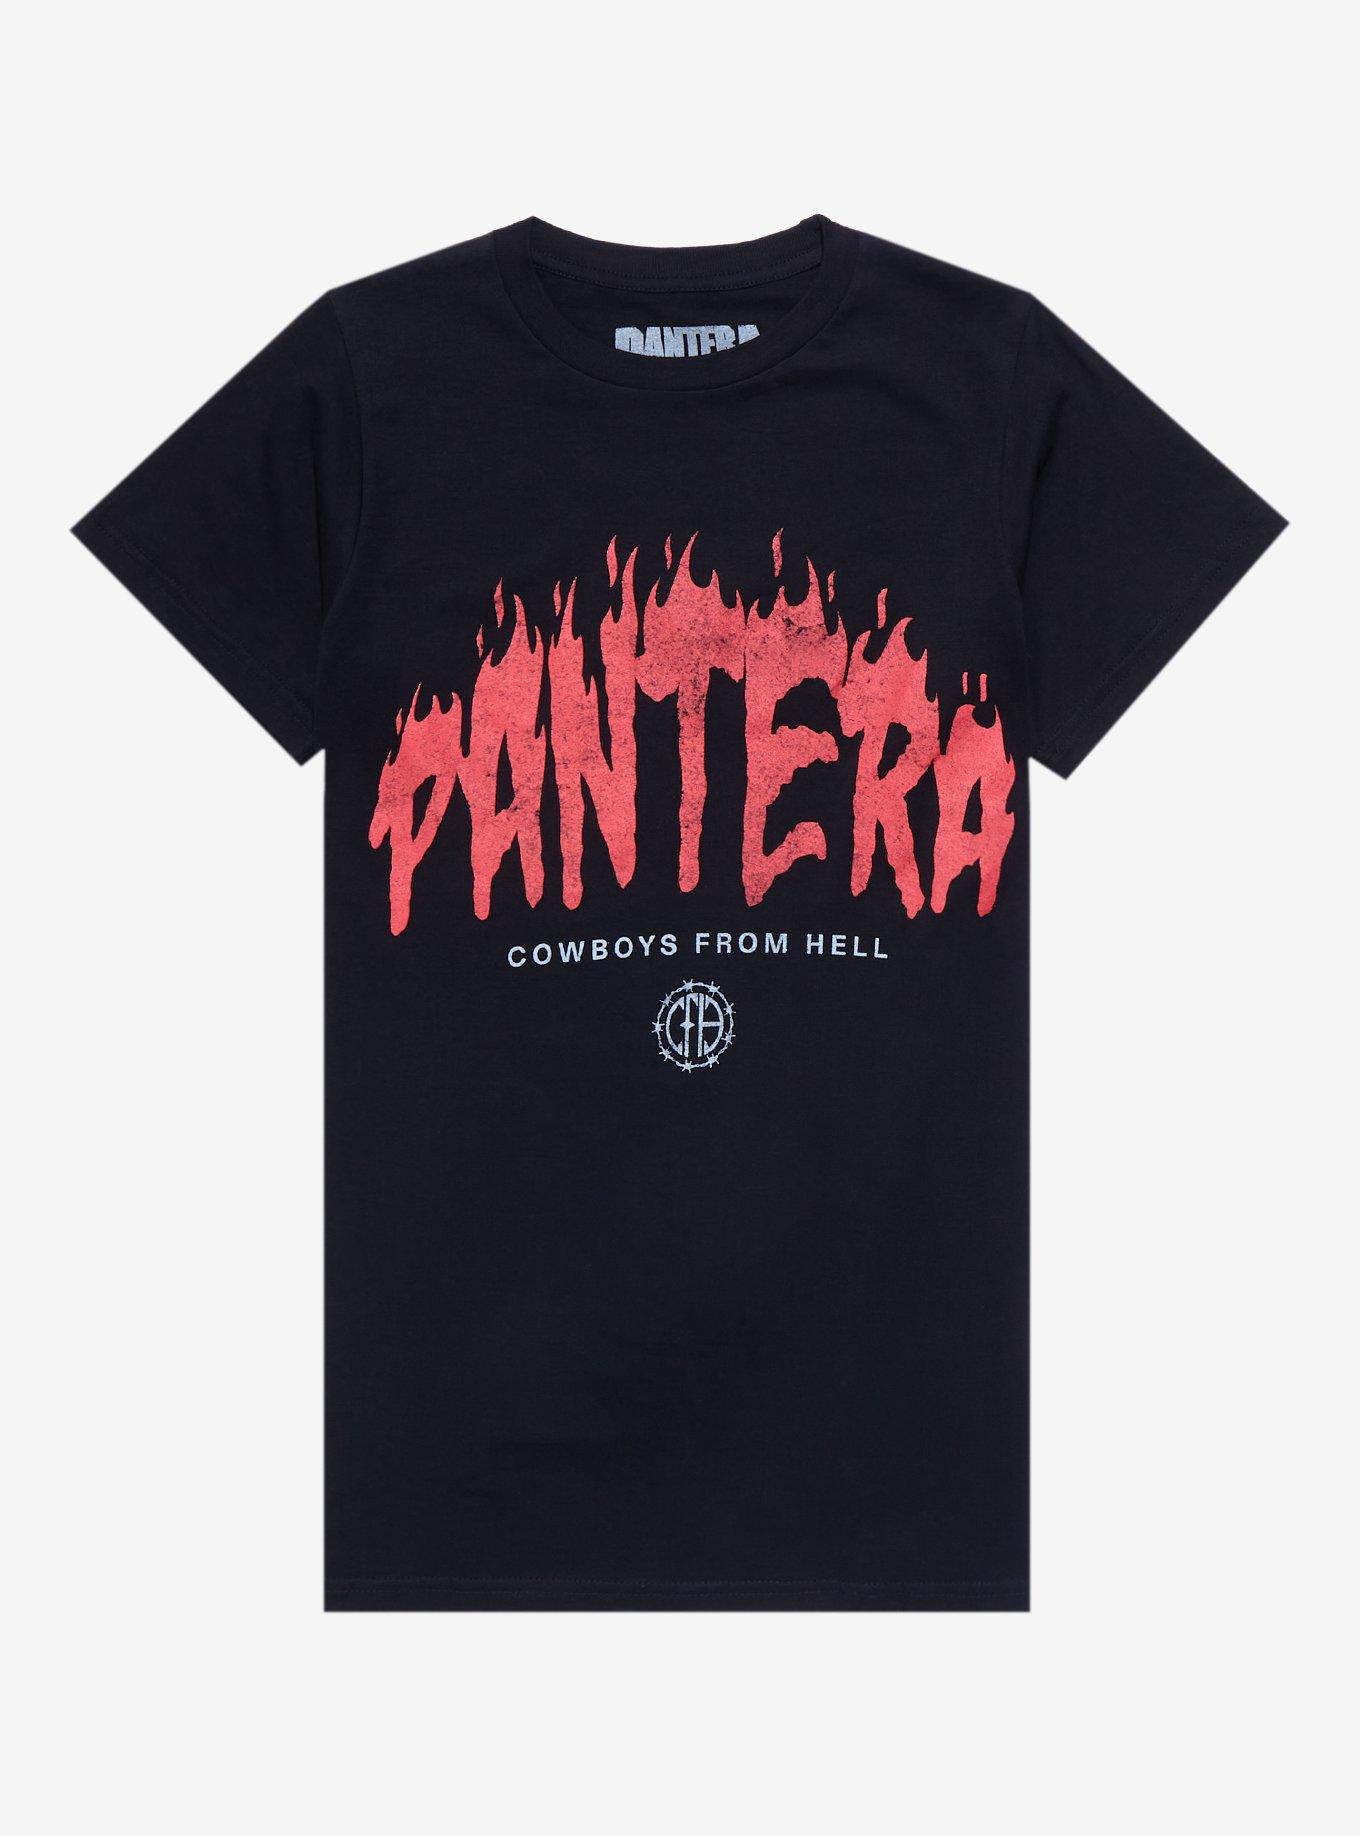 Pantera Cowboys From Hell Boyfriend Fit Girls T-Shirt